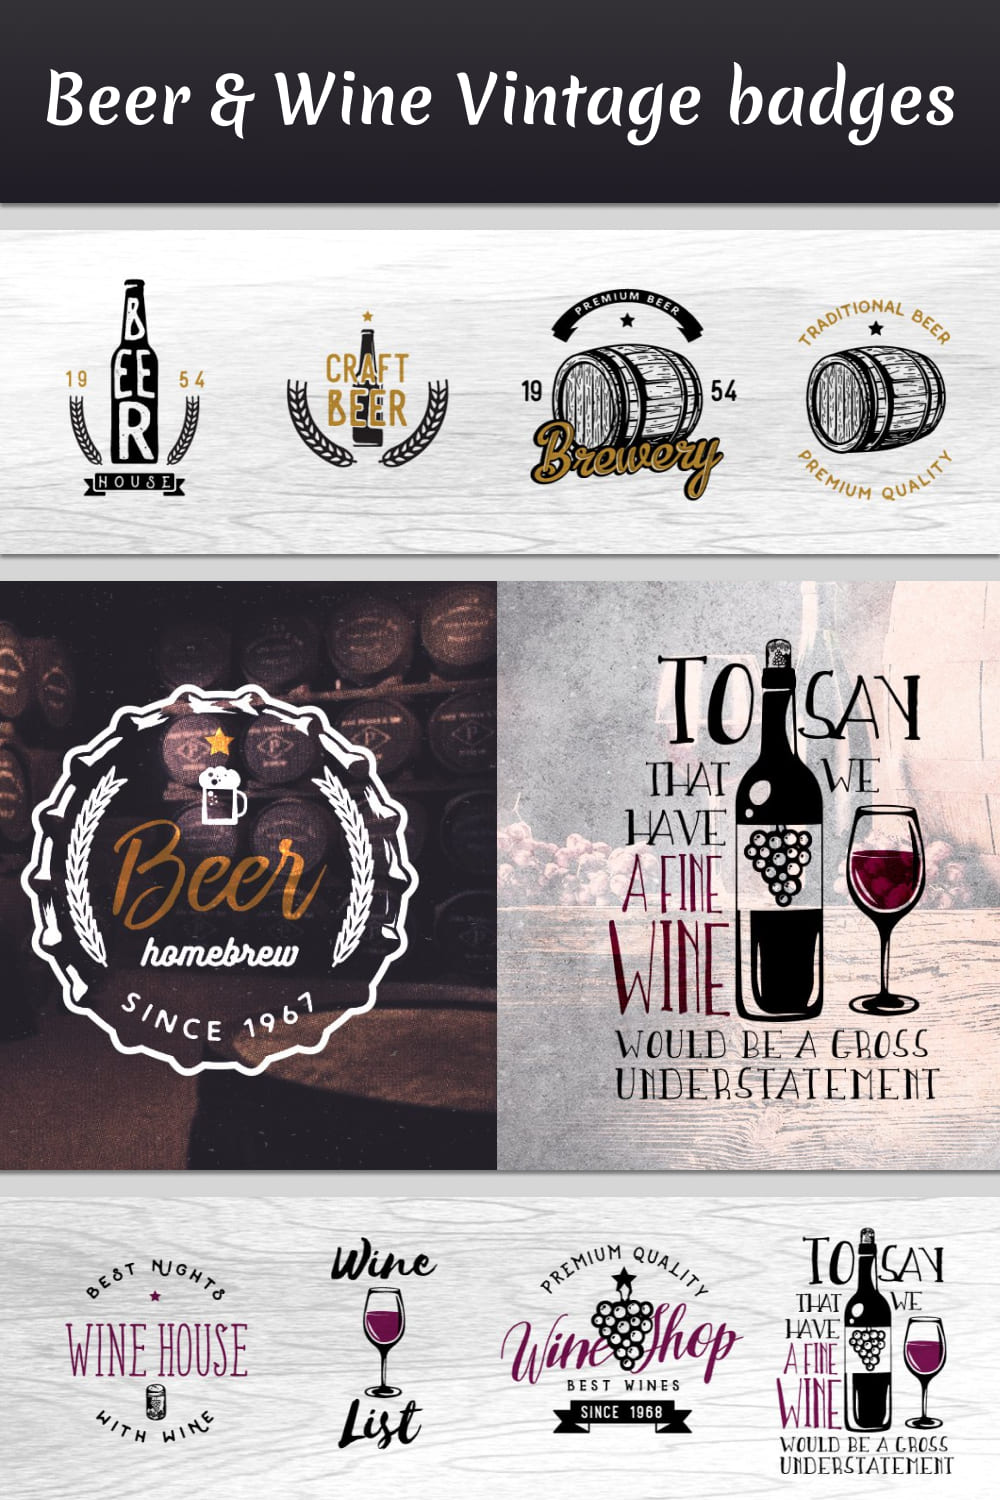 Beer & Wine Vintage Badges - Pinterest Image Preview.